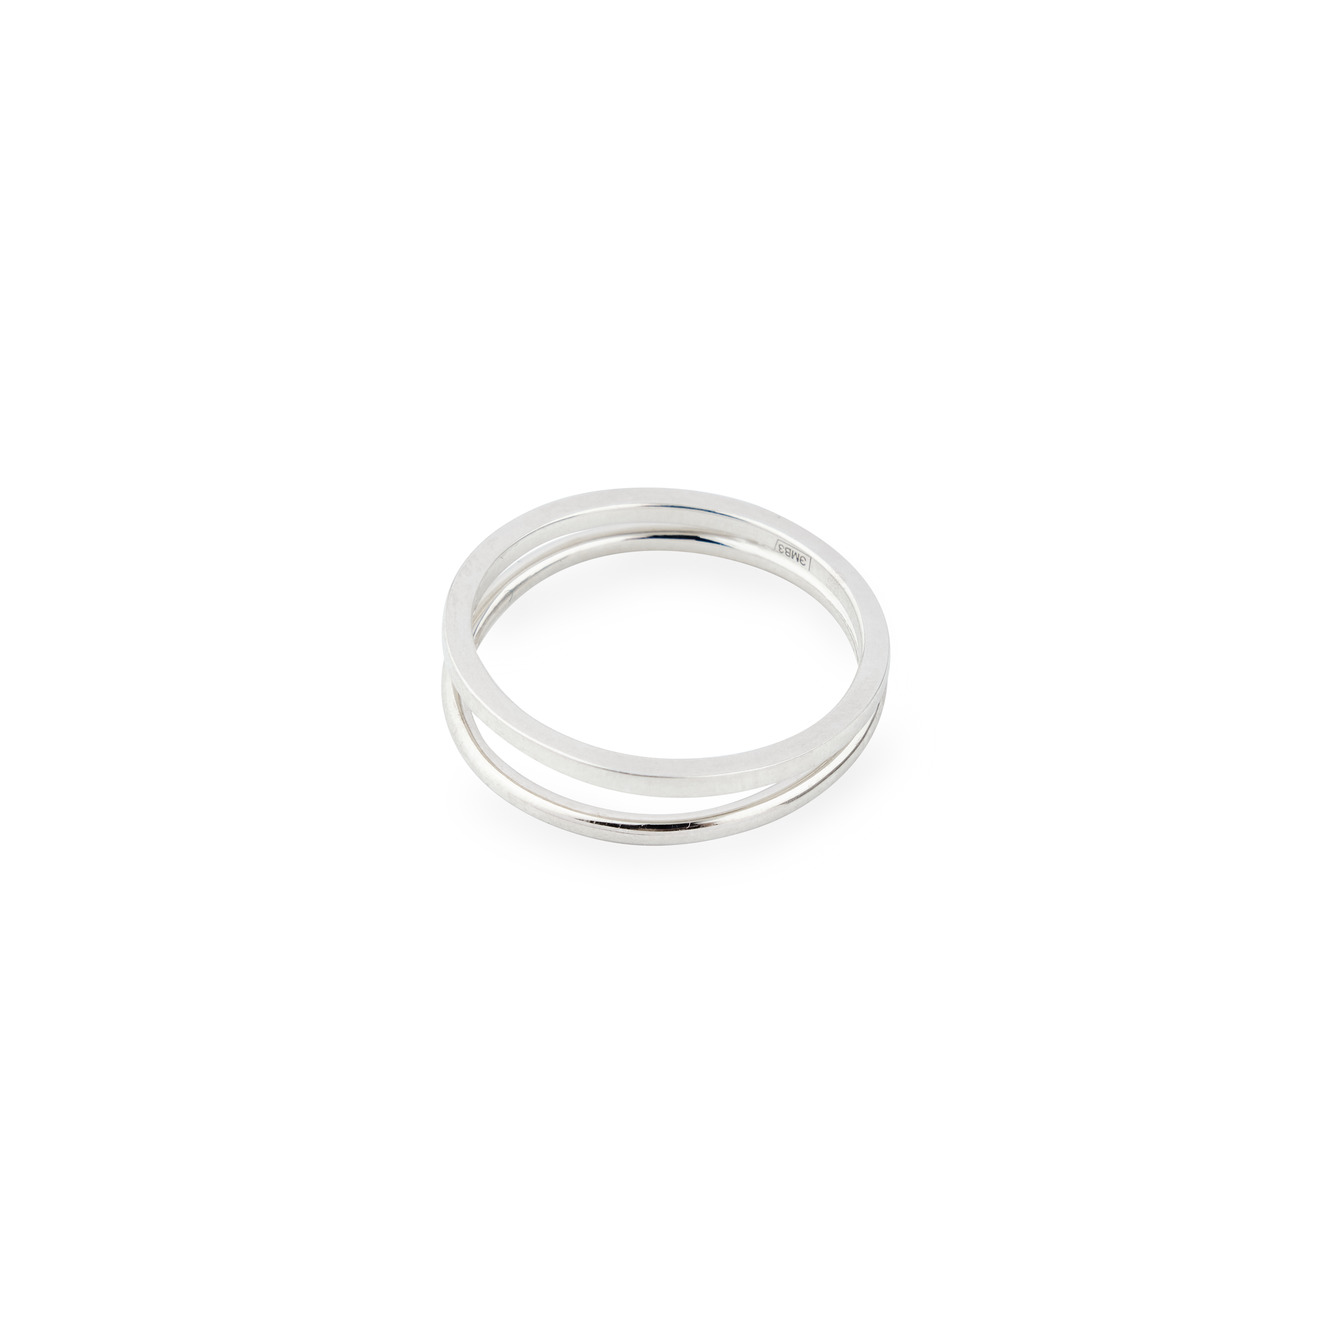 Ms. Marble Двойное кольцо из серебра Karma ms marble двойное позолоченное кольцо из серебра karma